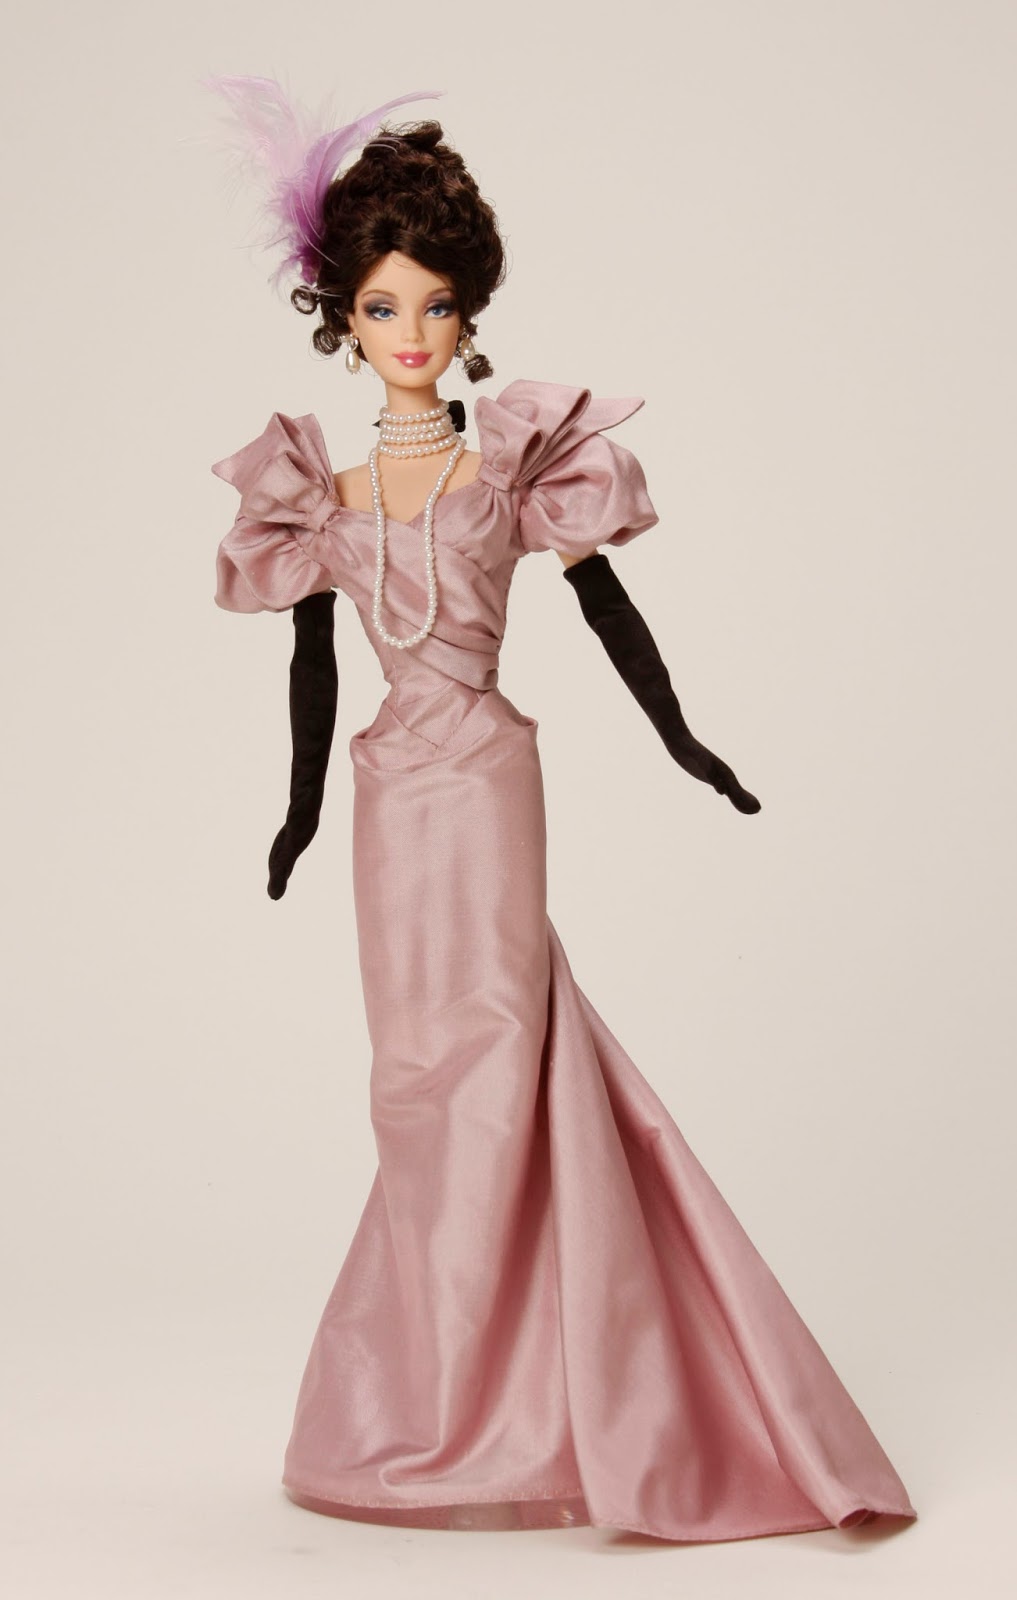 Beautiful And Cute Barbie Dolls | www.imgkid.com - The ...